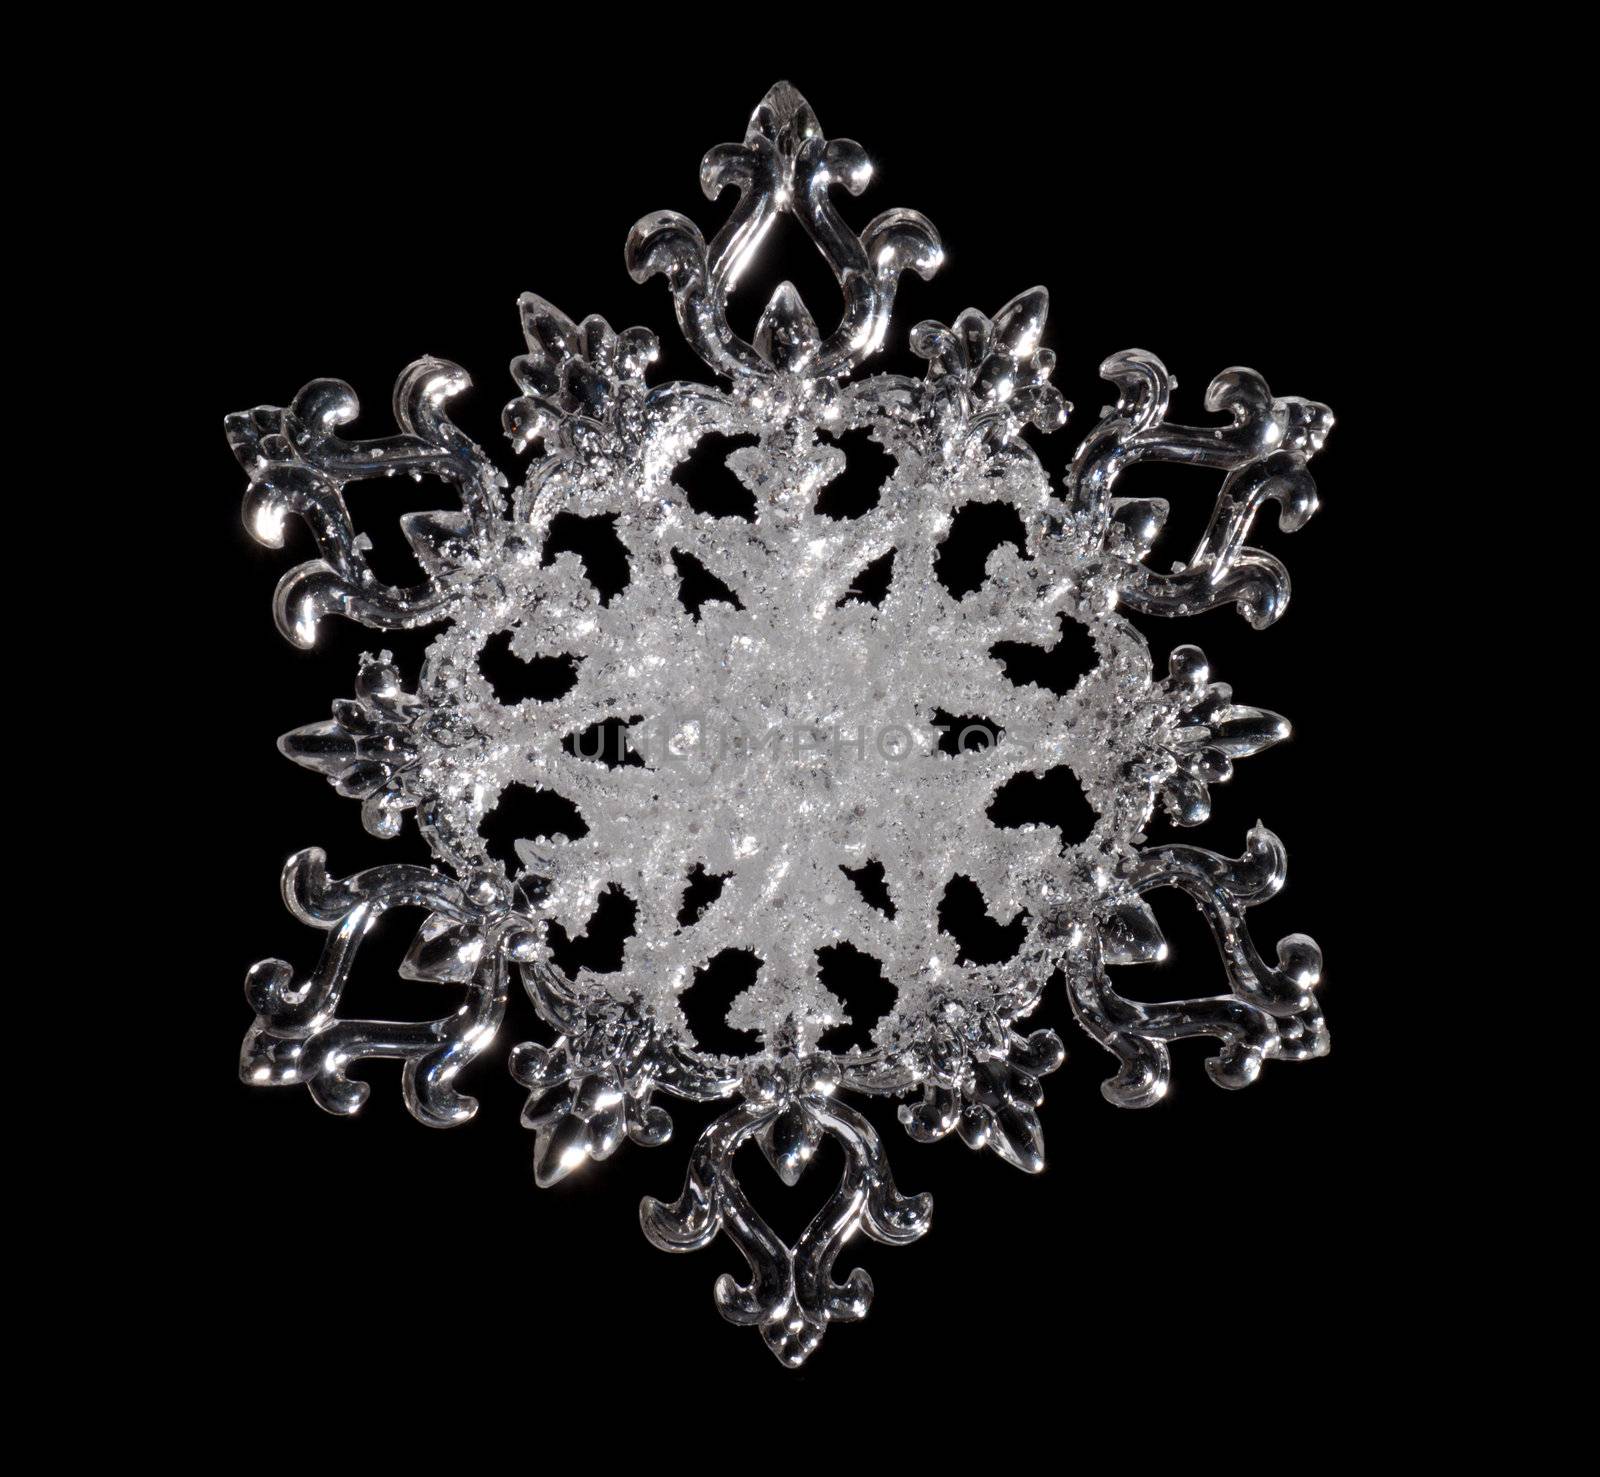 Snowflake by aguirre_mar